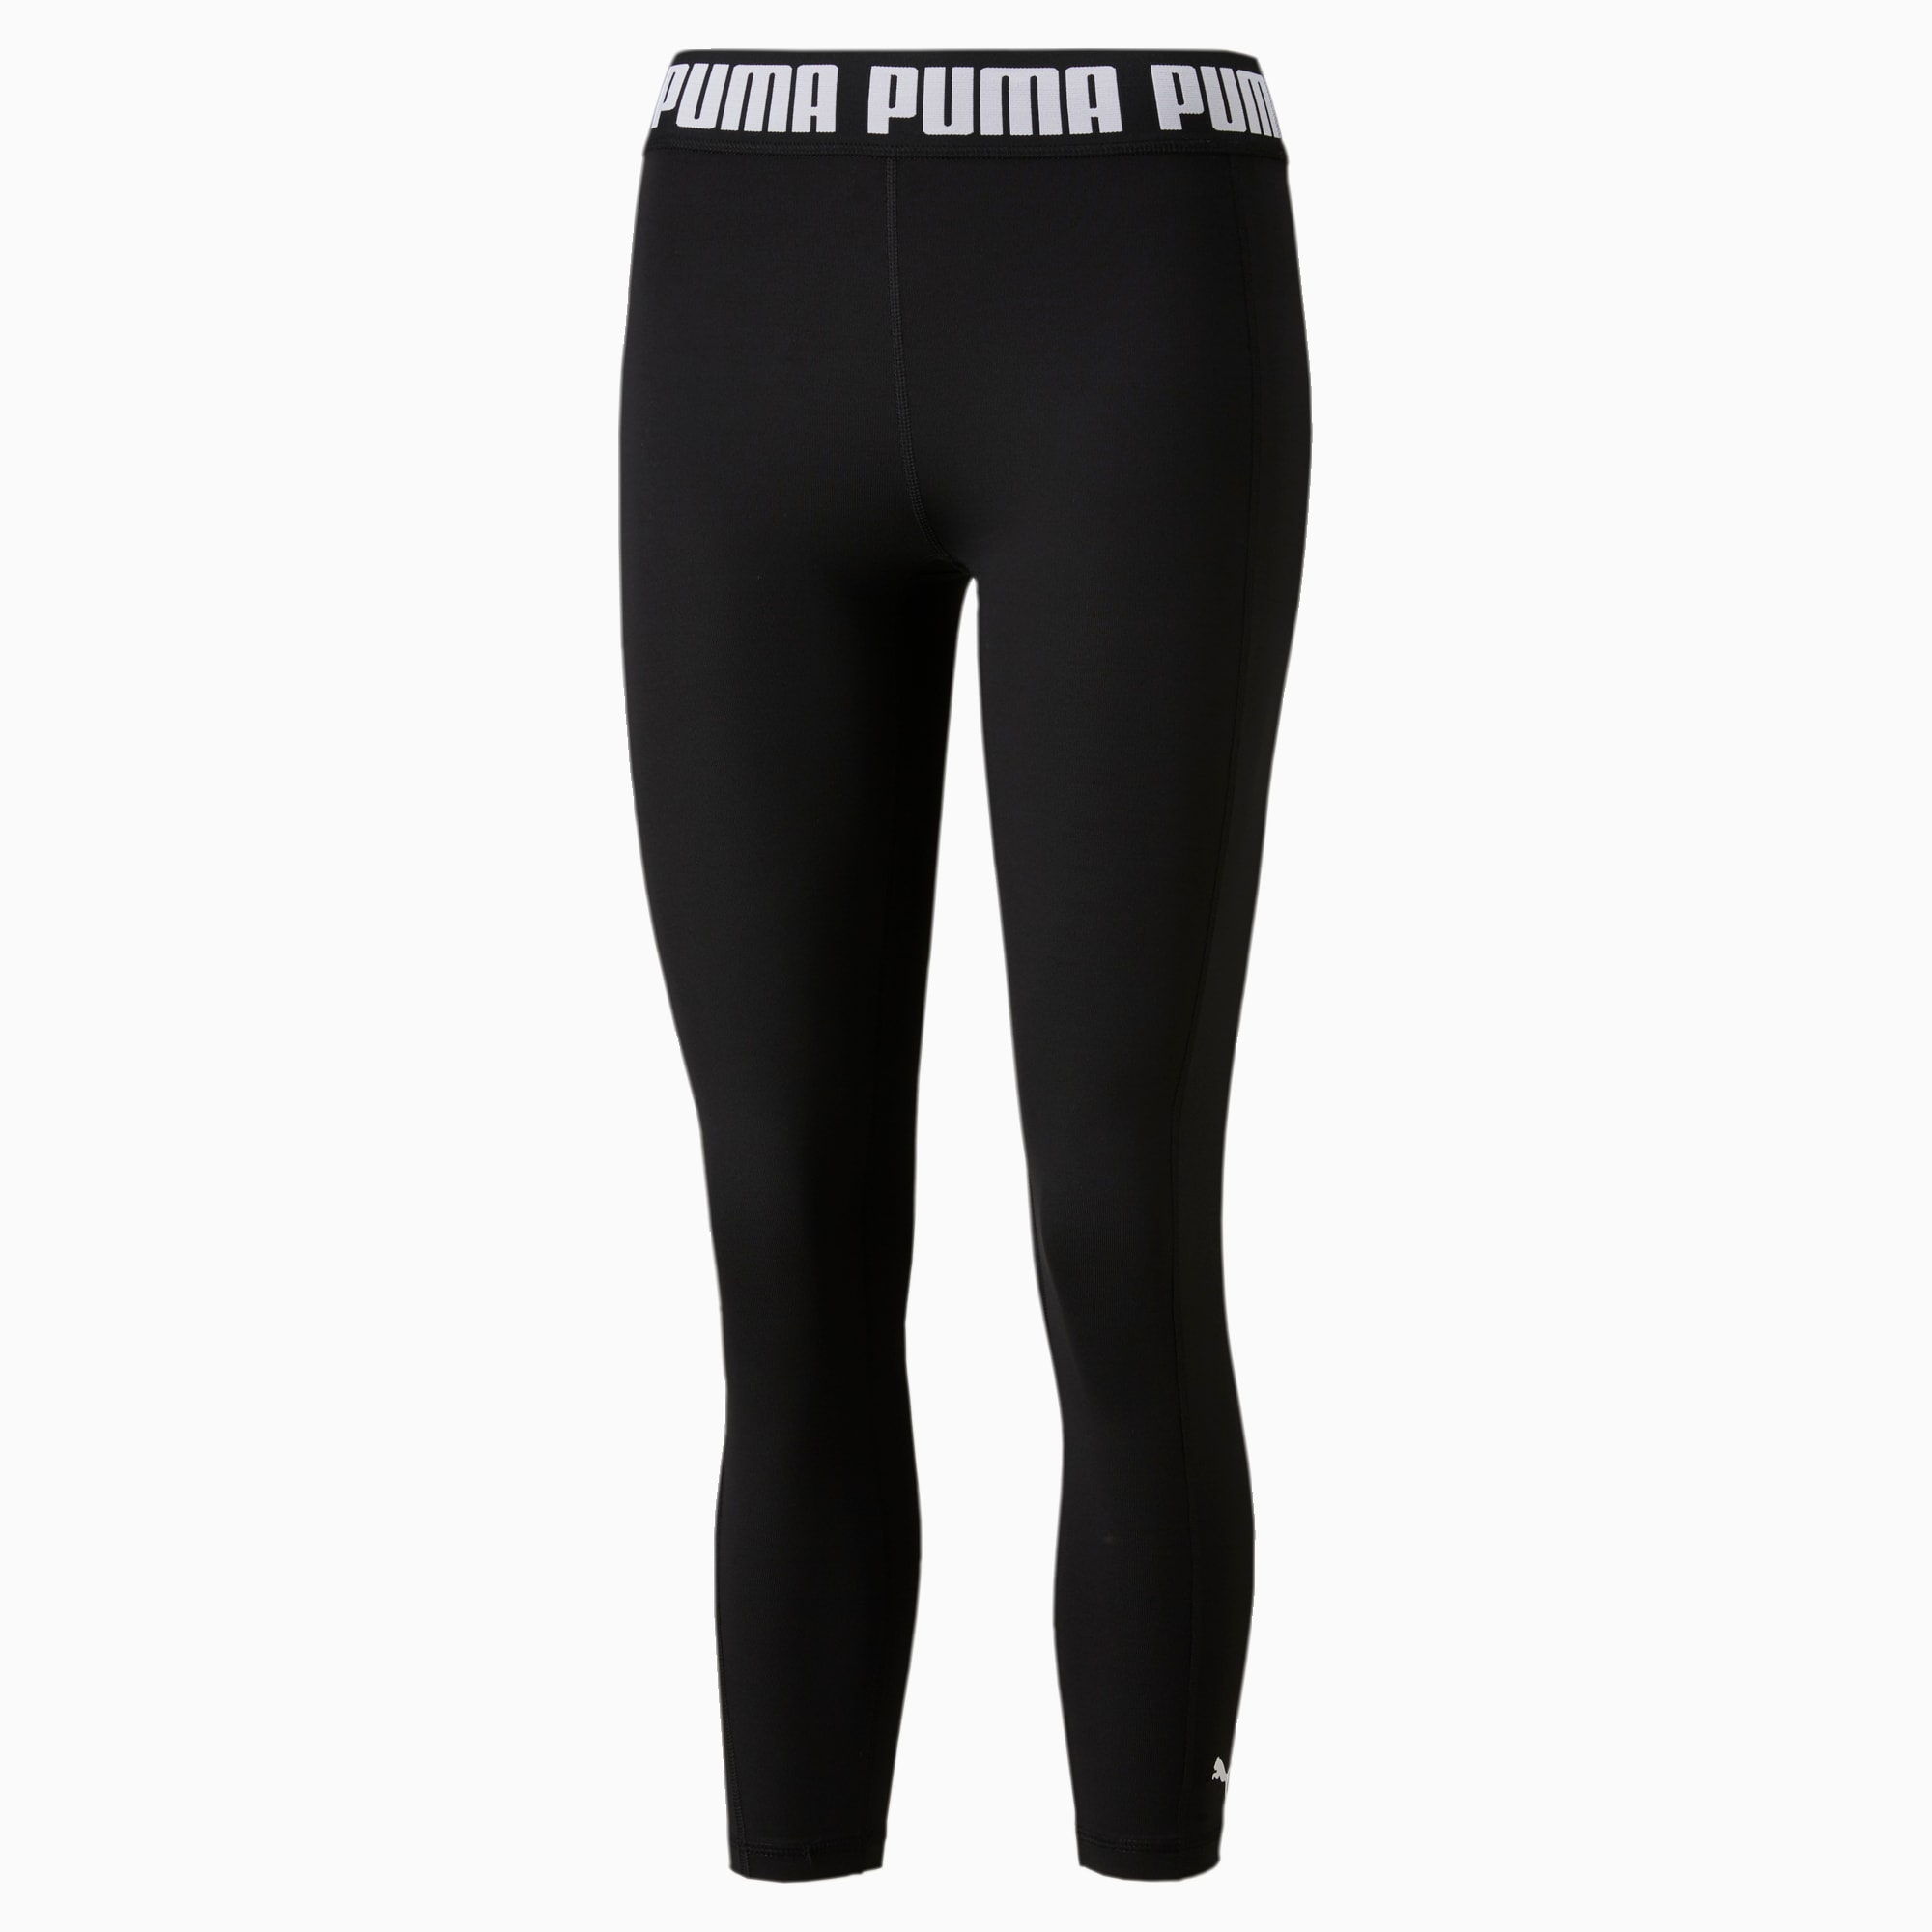 PUMA Strong High Waisted Women's Training Leggings, Black, Size XXL, Clothing